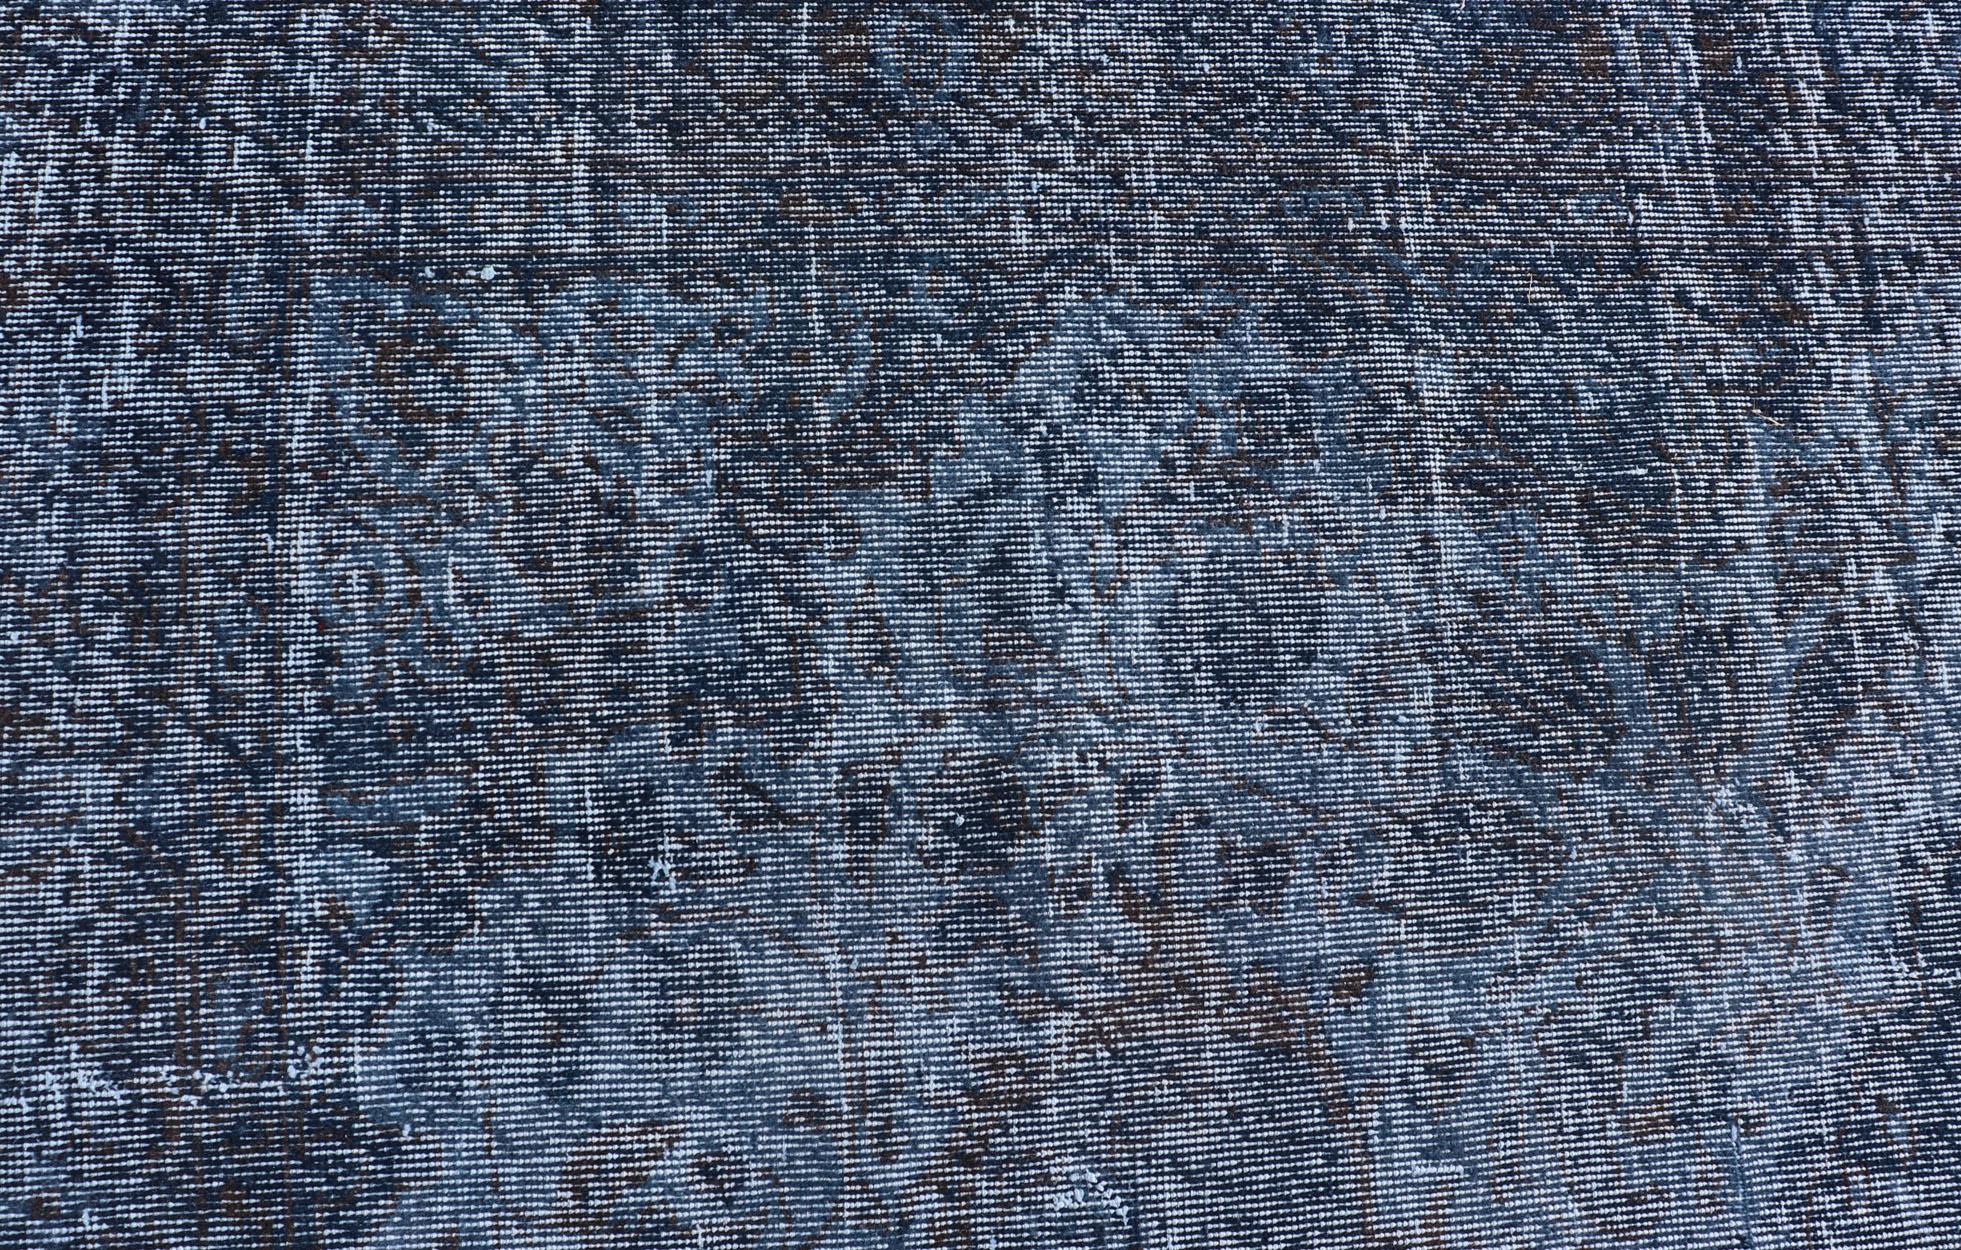 Vintage overdyed oushak rug in dark blue and charcoal. Keivan Woven Arts / rug EN-P13617, country of origin / type: Turkey / Oushak, circa Mid-20th Century.

Measures: 6'1 x 9'9.